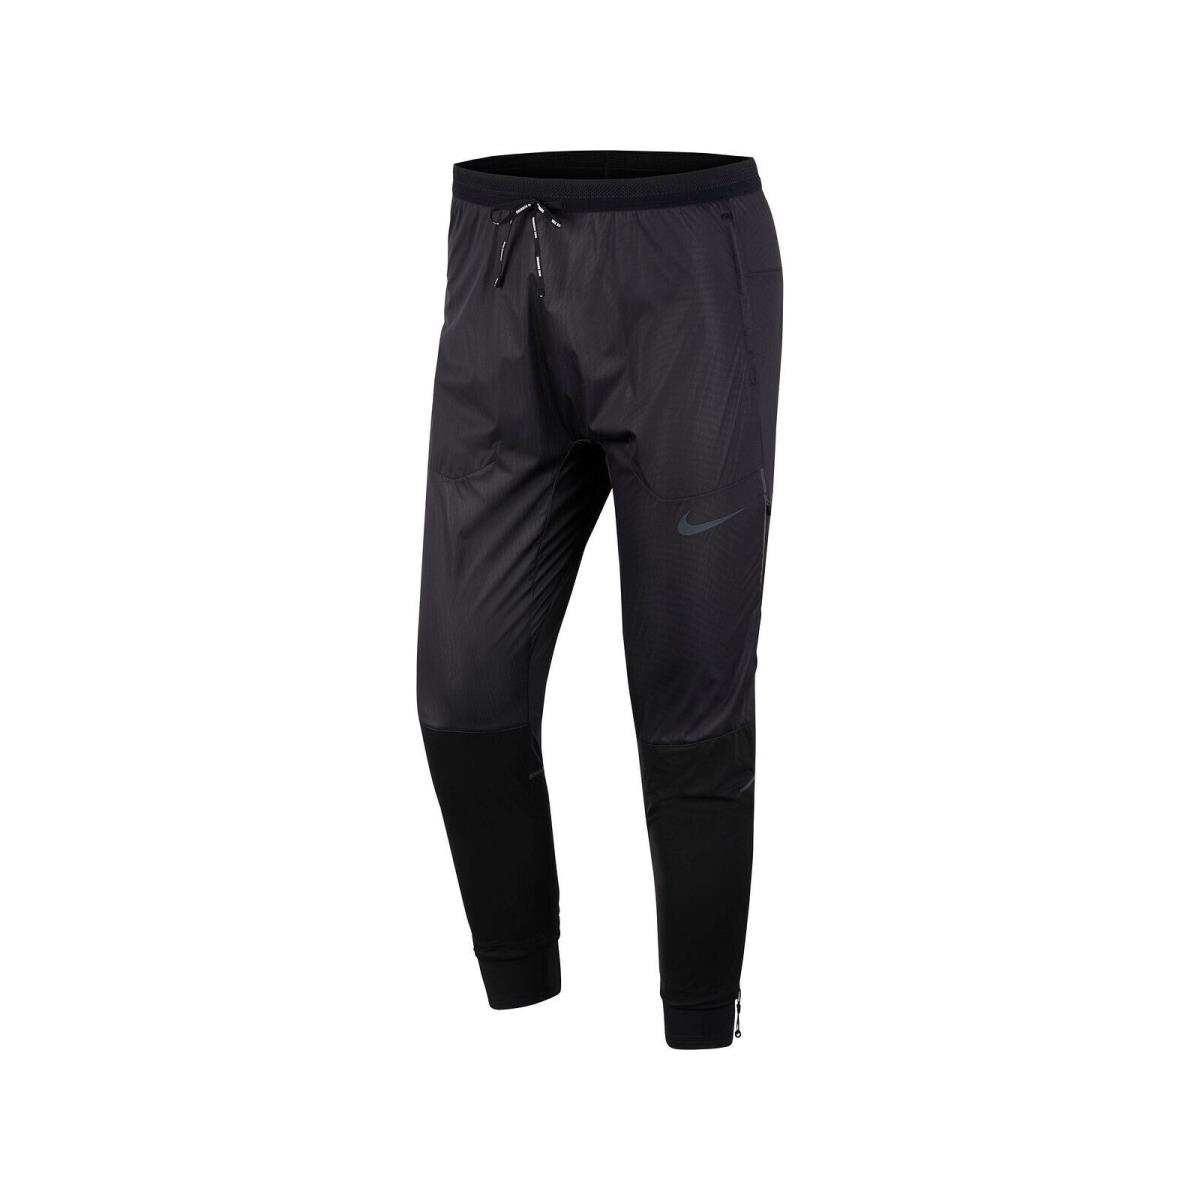 Nike Swift Shield Slim Fit Running Pants Men`s Black X-large CU7857 010